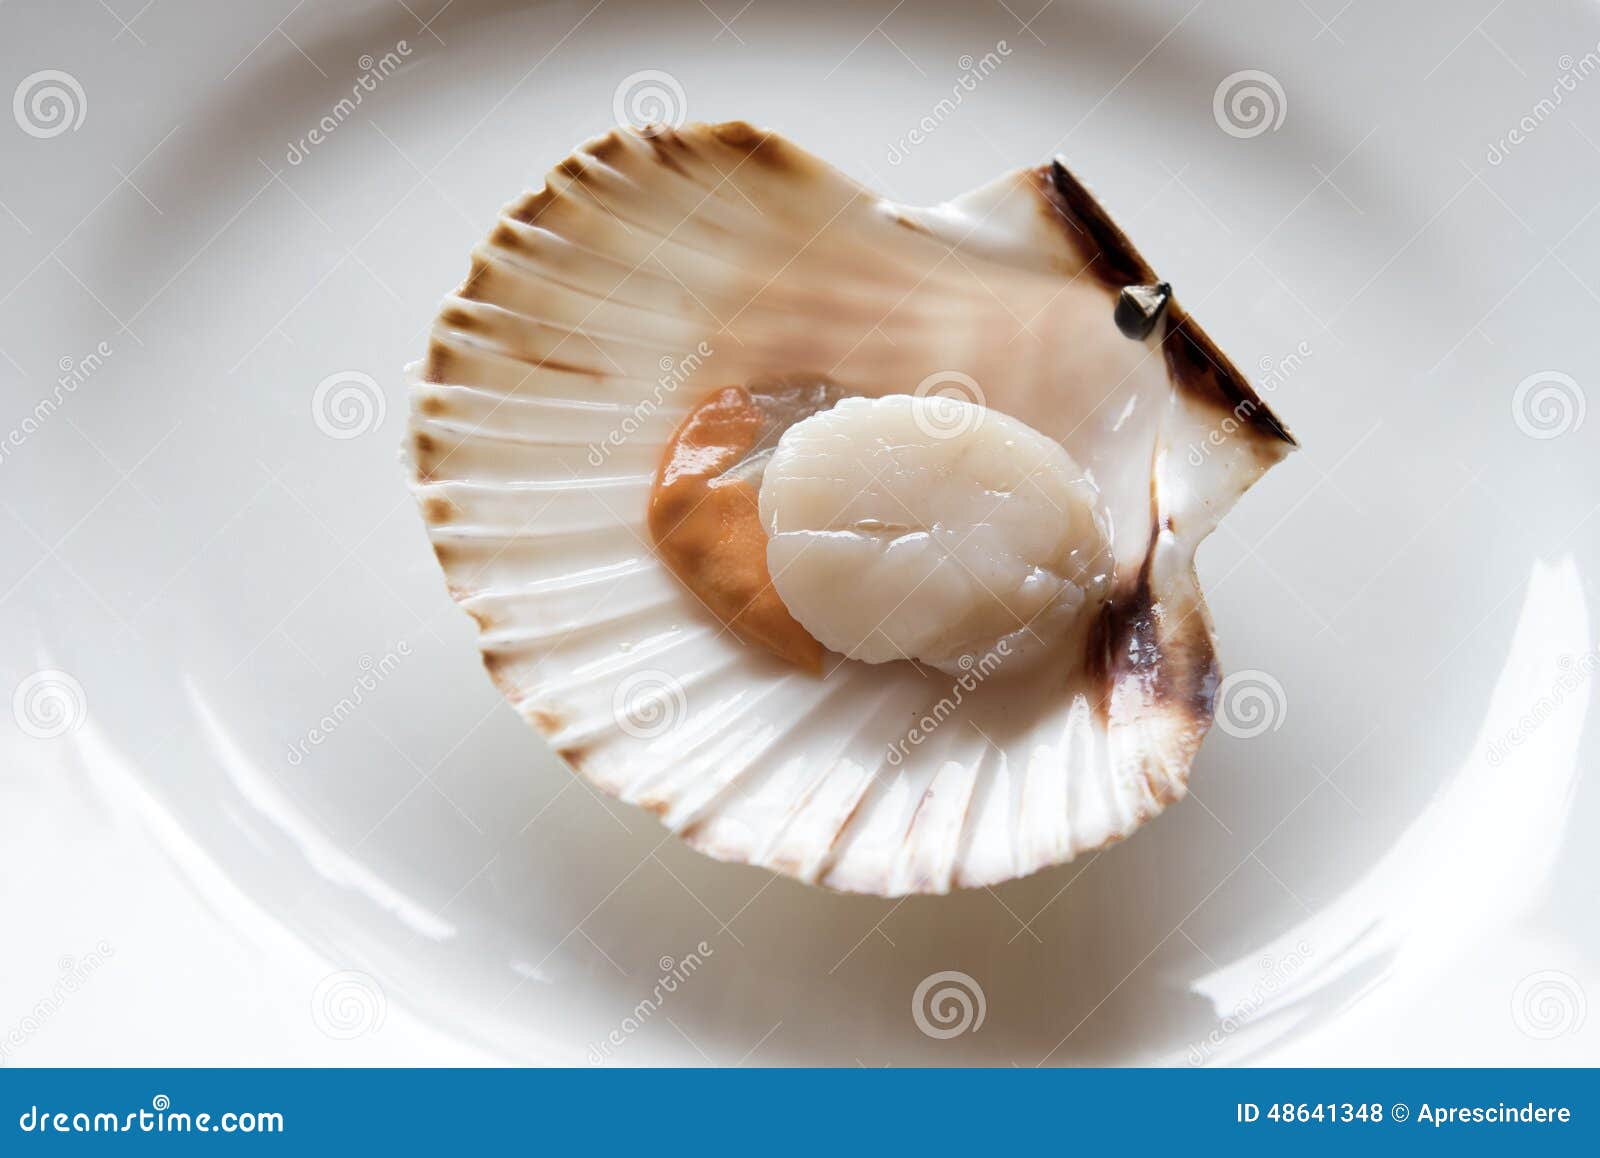 Opened scallop stock photo. Image of shell, antioxidant - 48641348